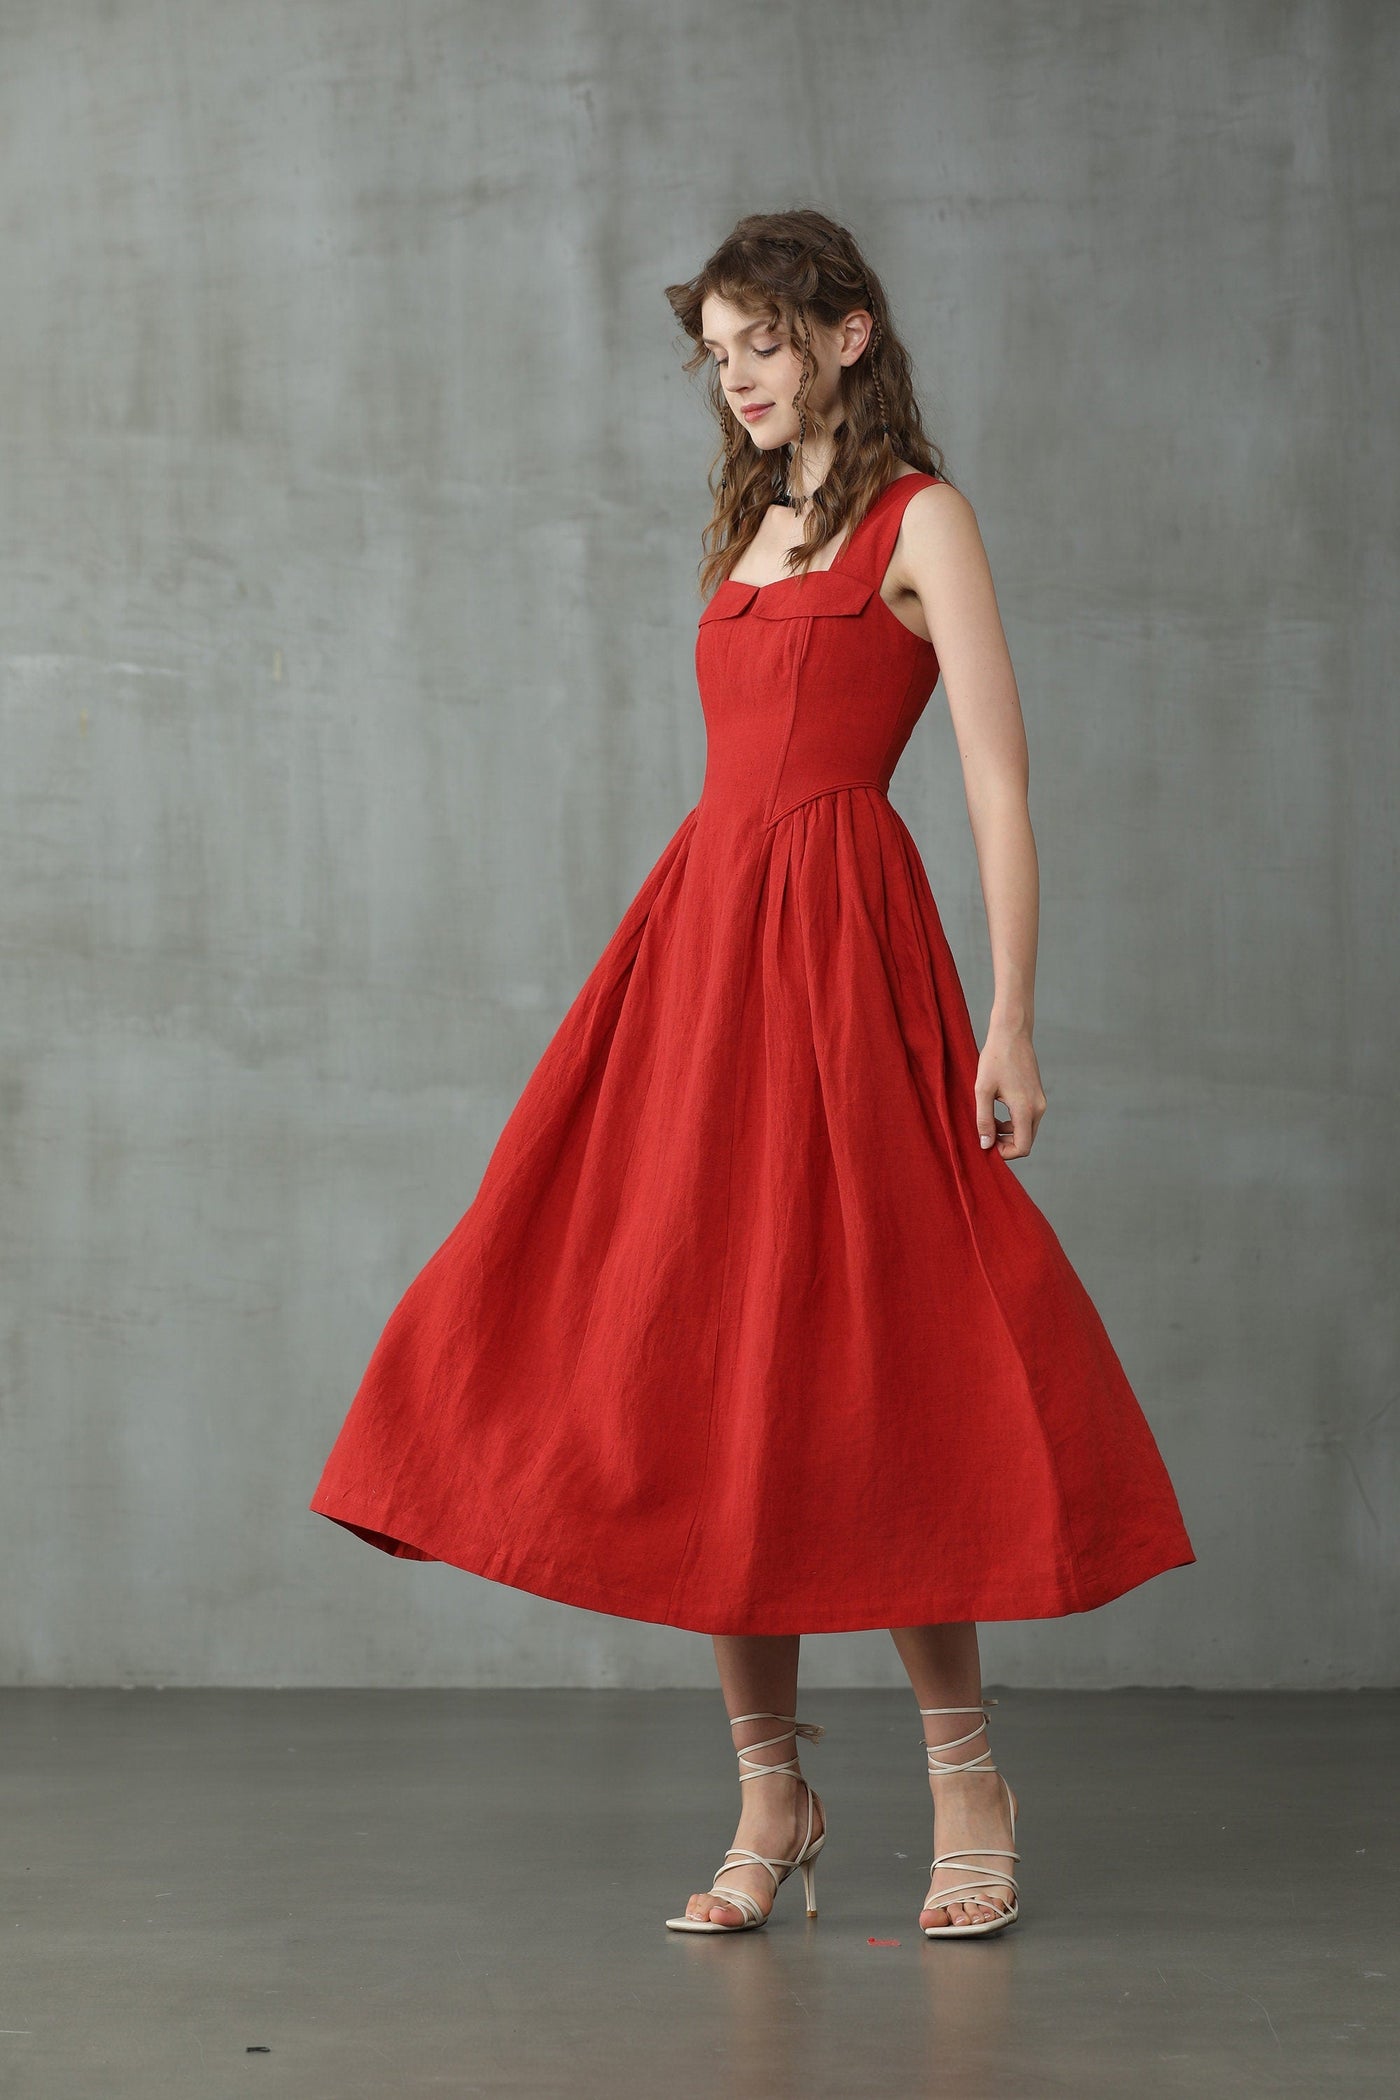 Dogwood 41| Linen Halter Dress